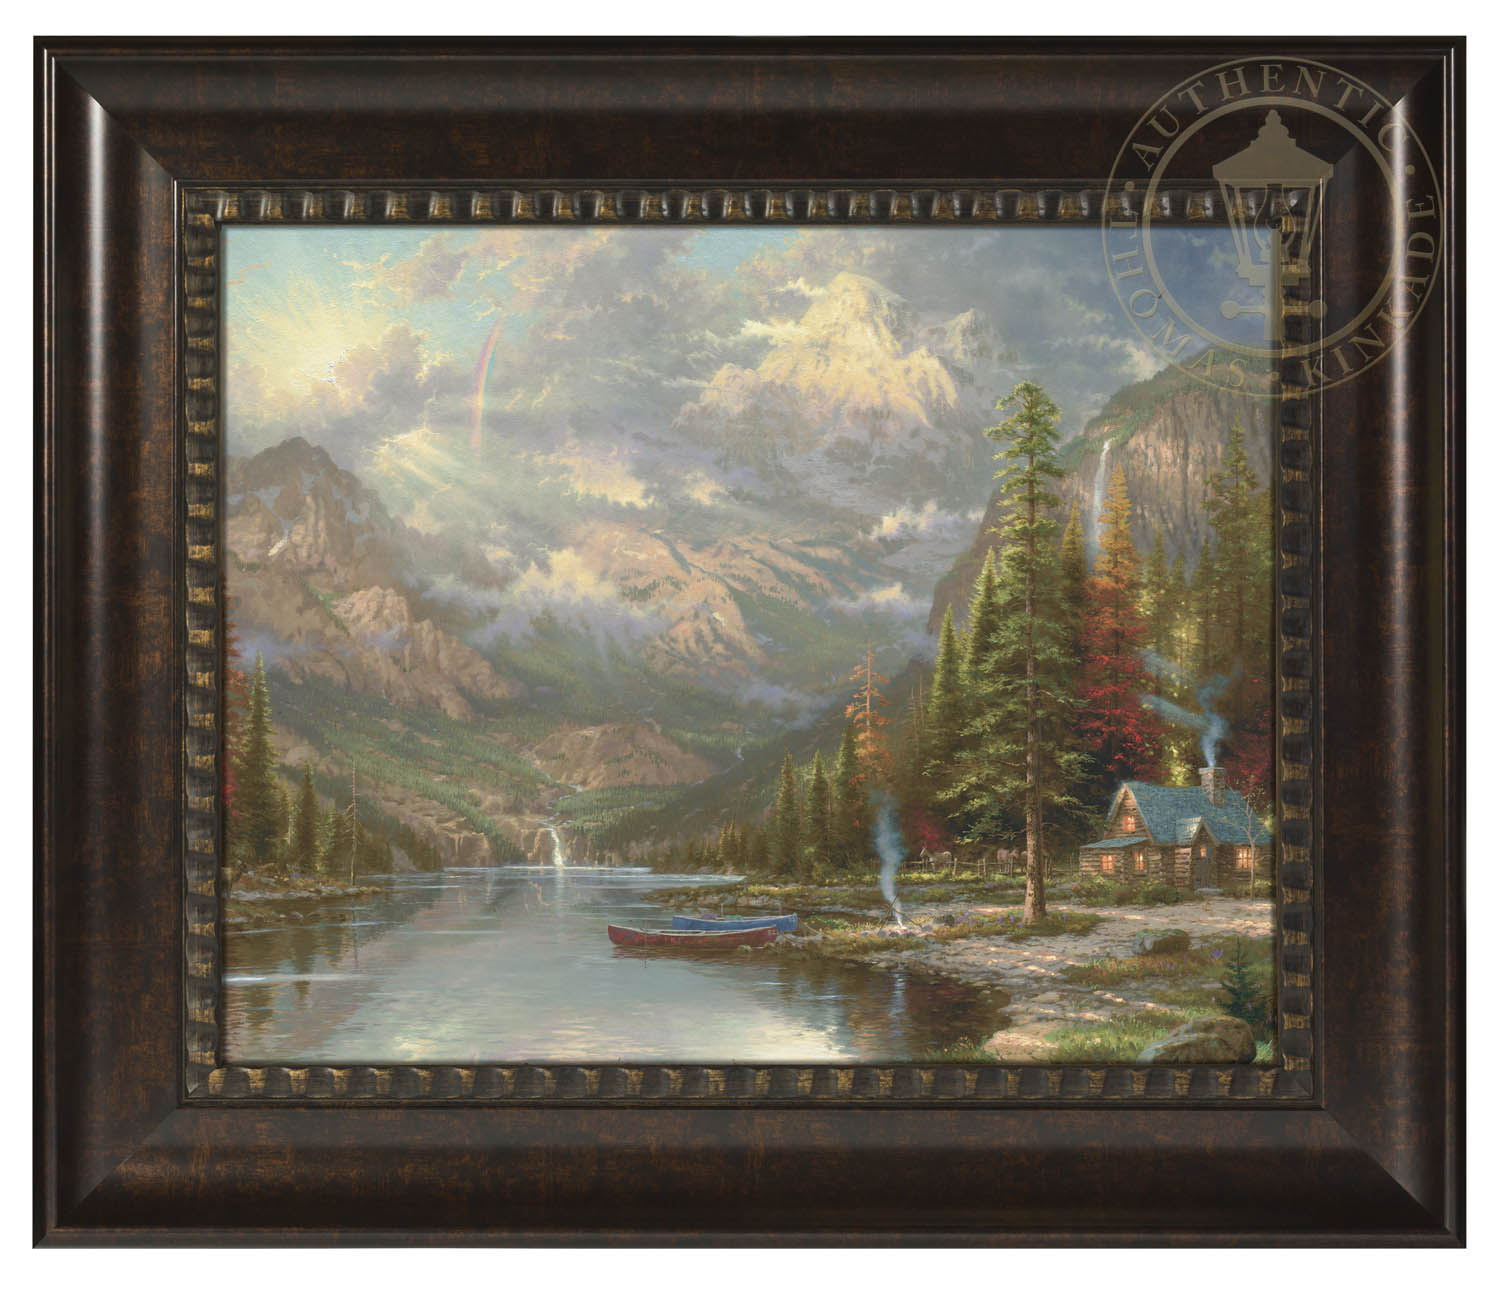 Great BIG Canvas  The Mountain Art Print - 16x20 